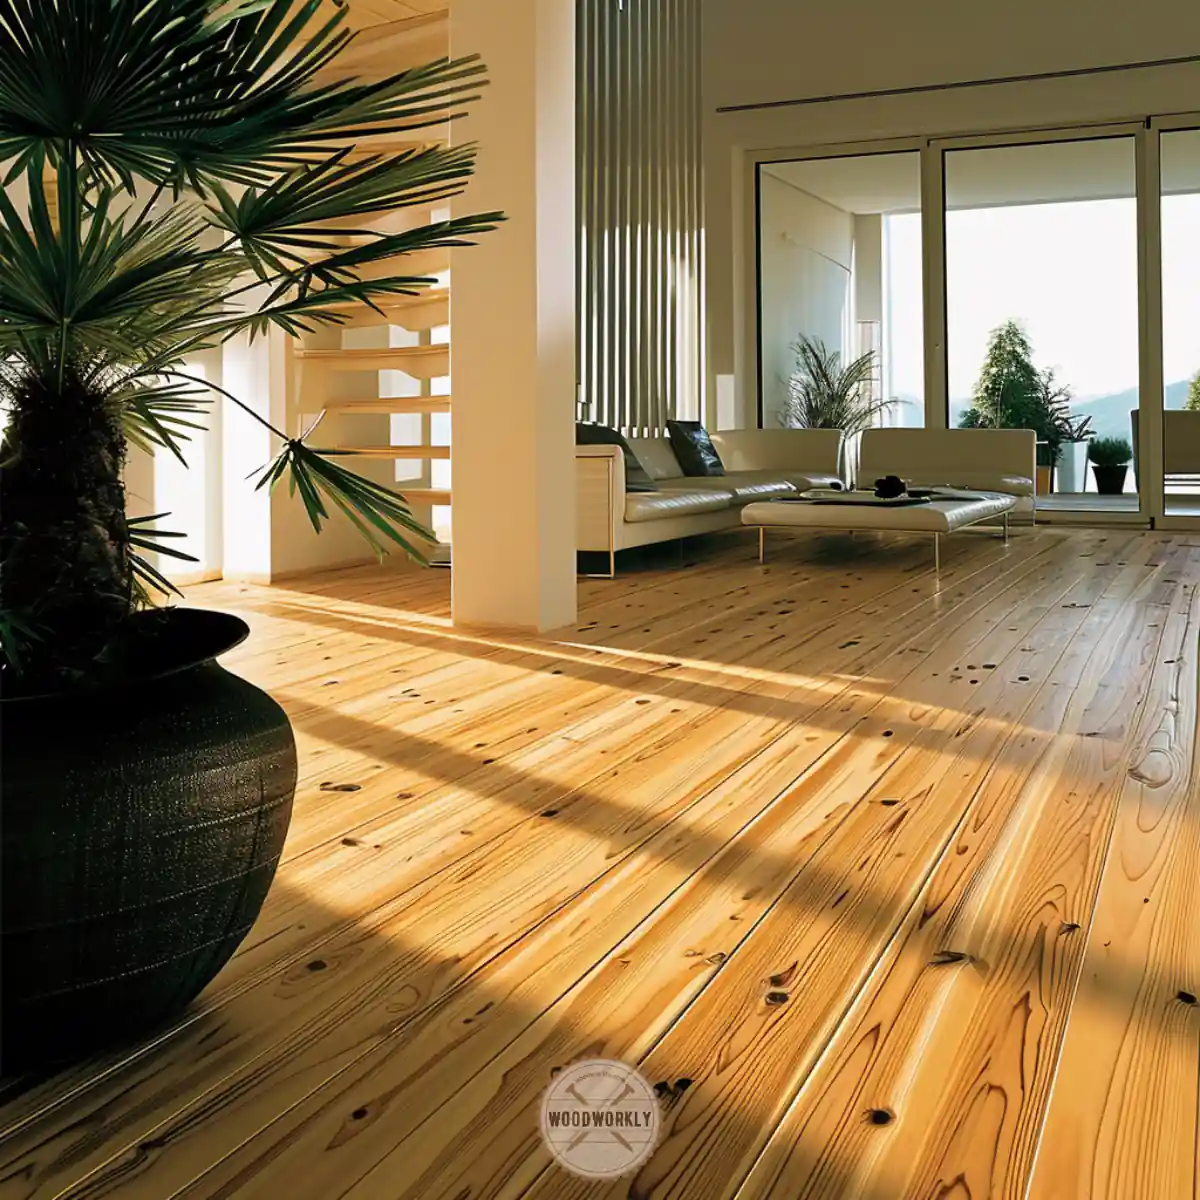 Pine flooring